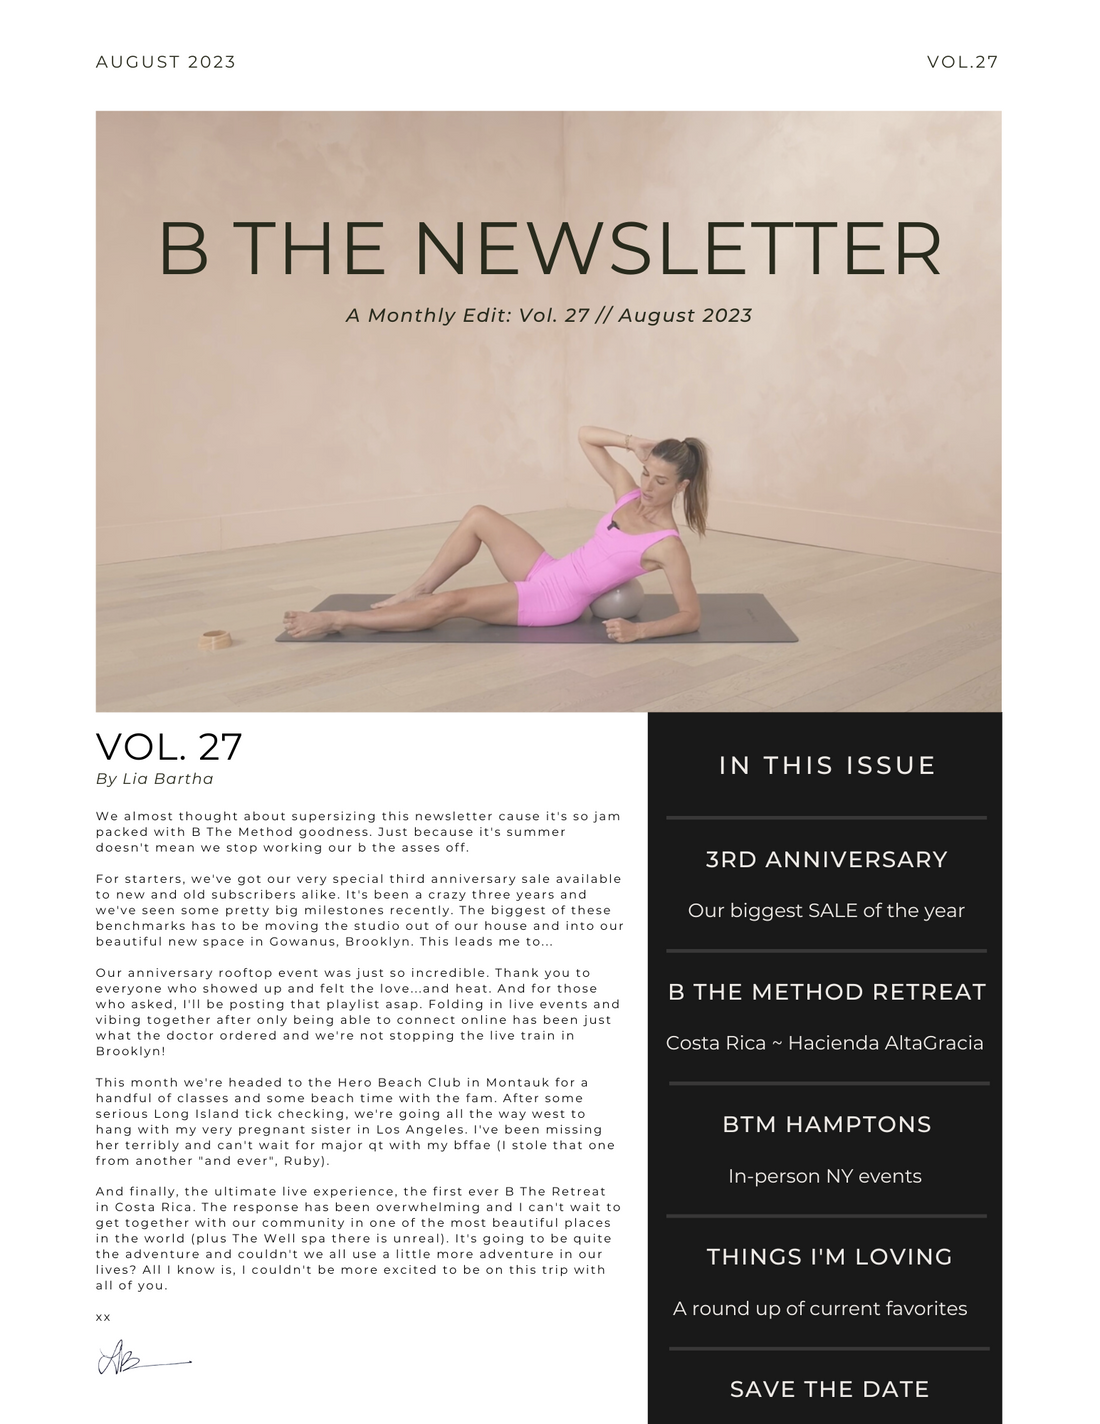 Newsletter Vol.27